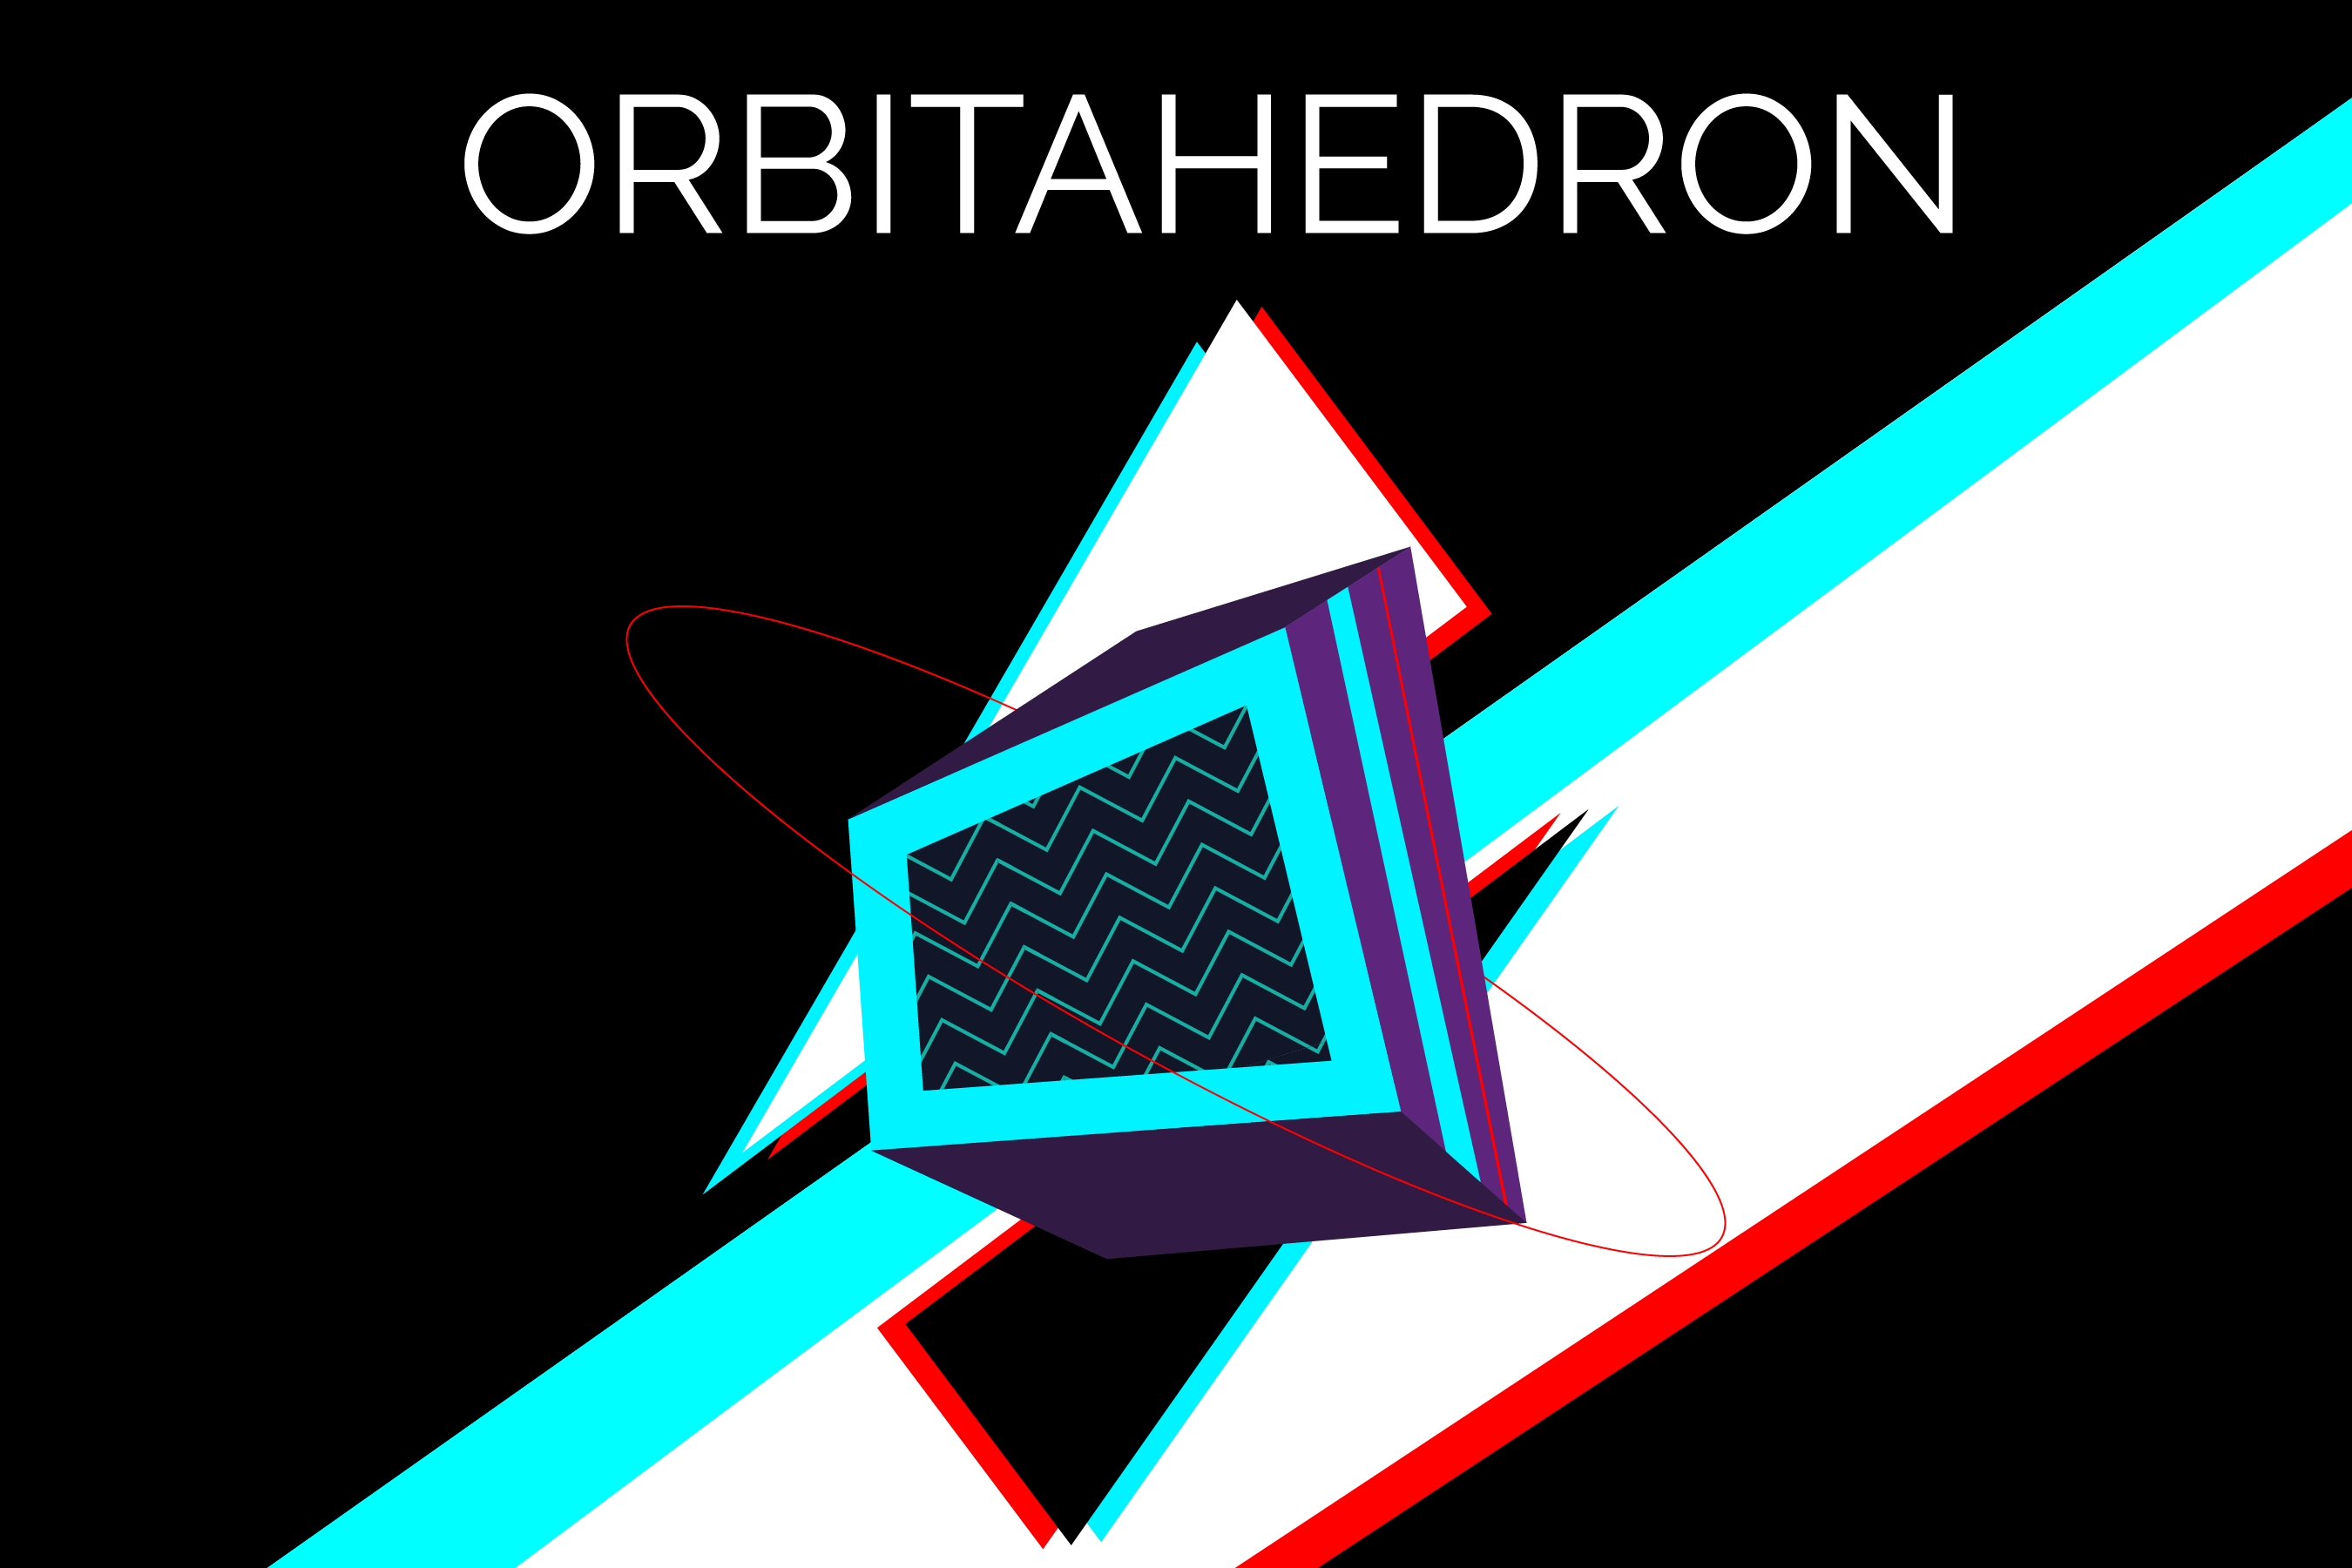 Orbitahedron